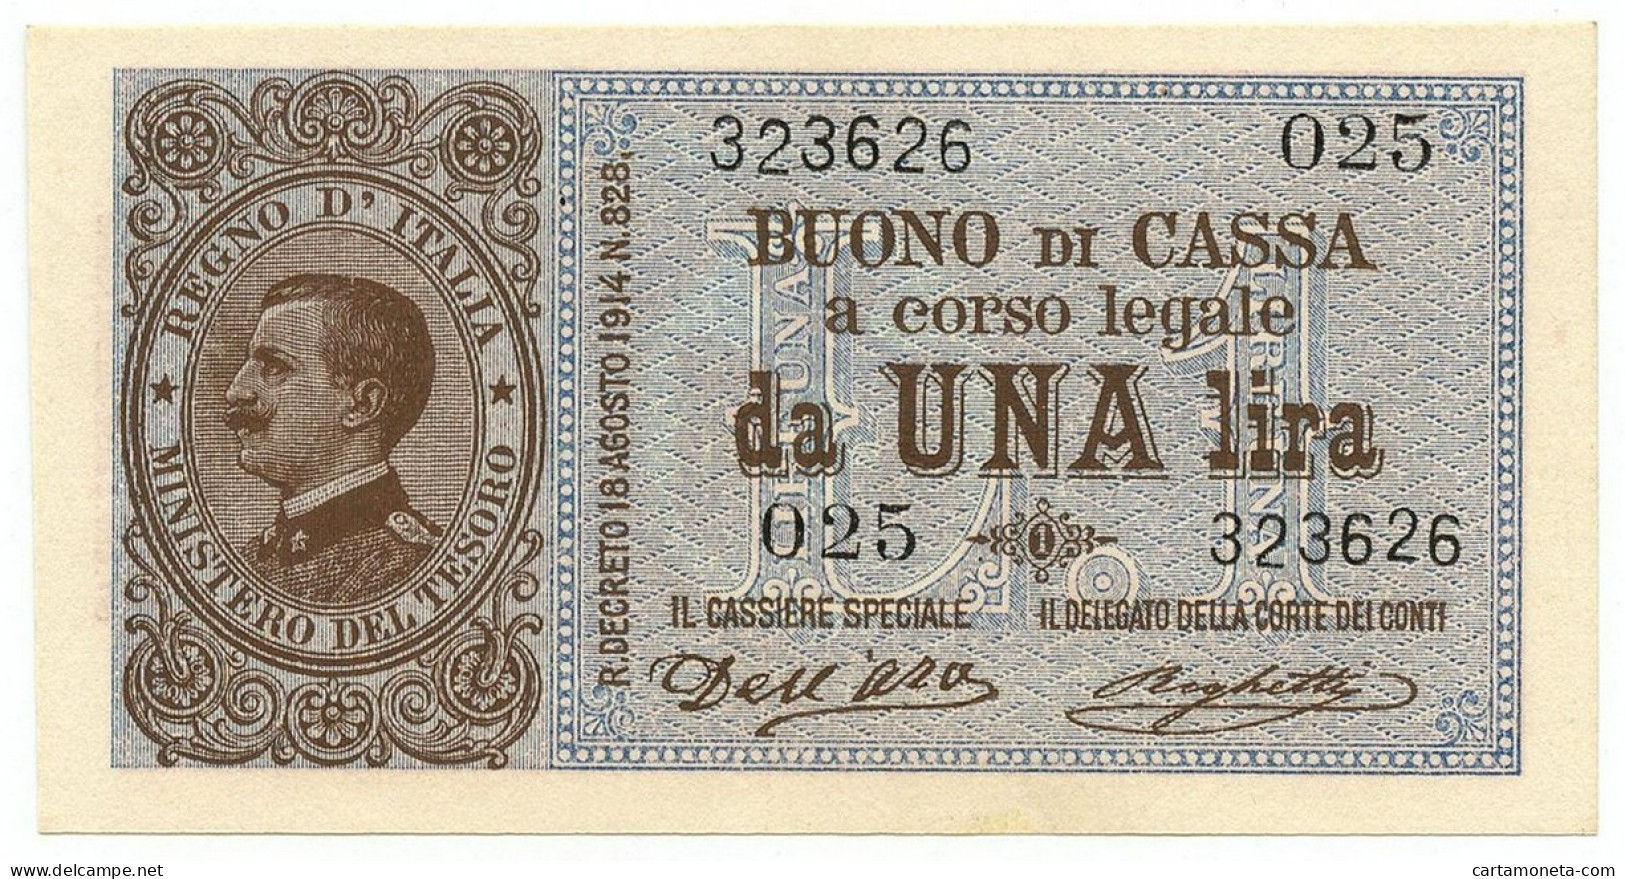 1 LIRA BUONO DI CASSA EFFIGE VITTORIO EMANUELE III 02/09/1914 QFDS - Otros